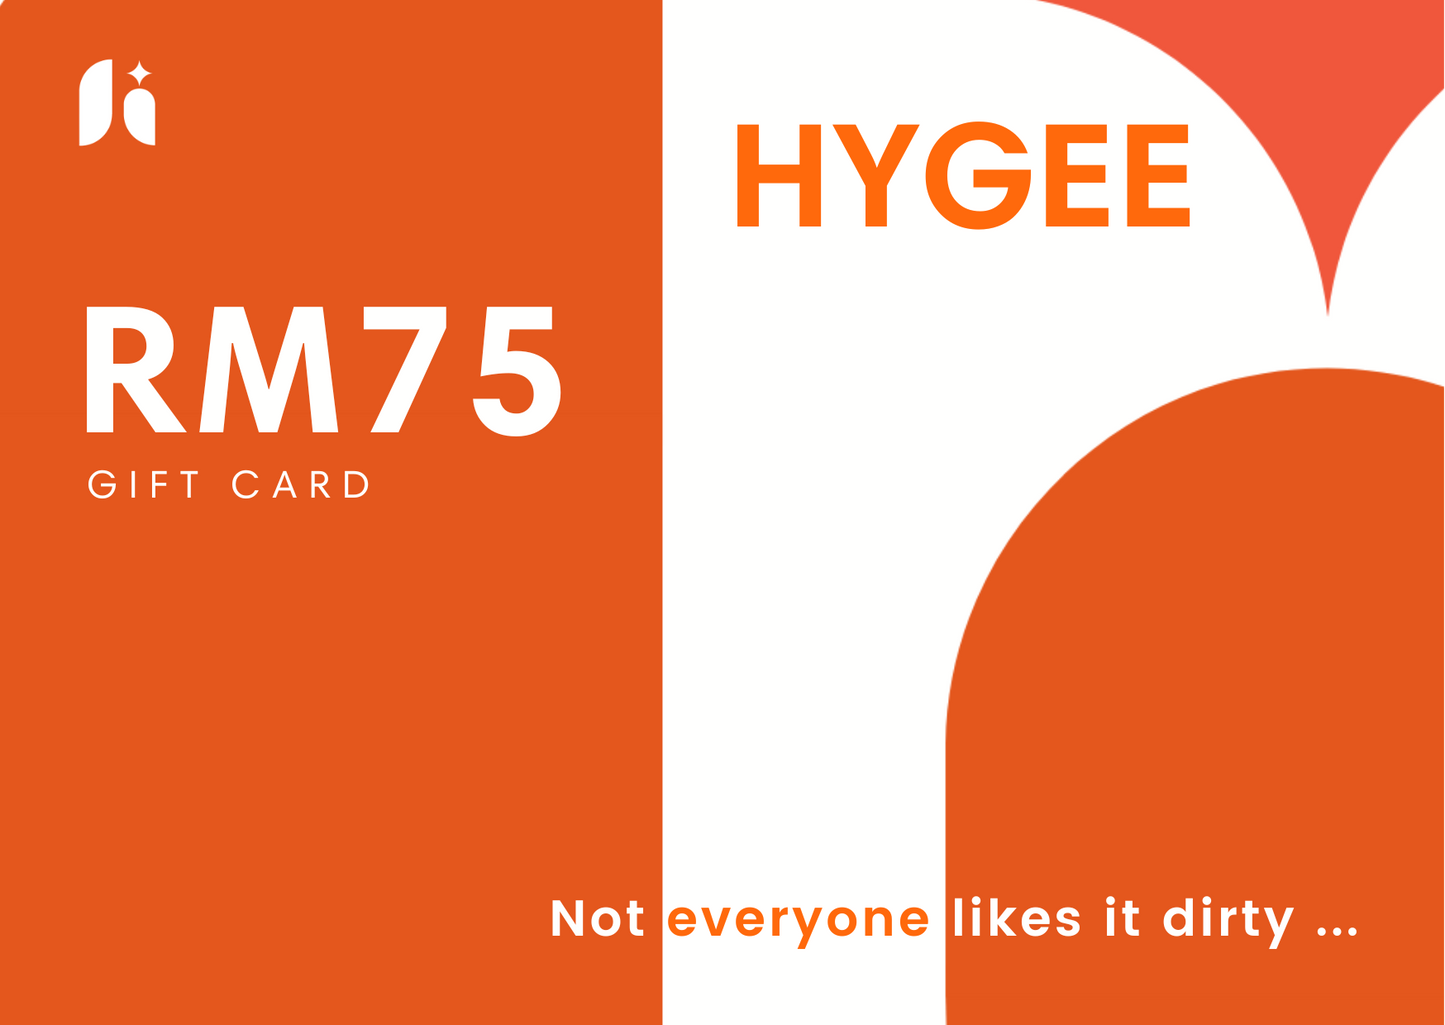 HYGEE Gift Card